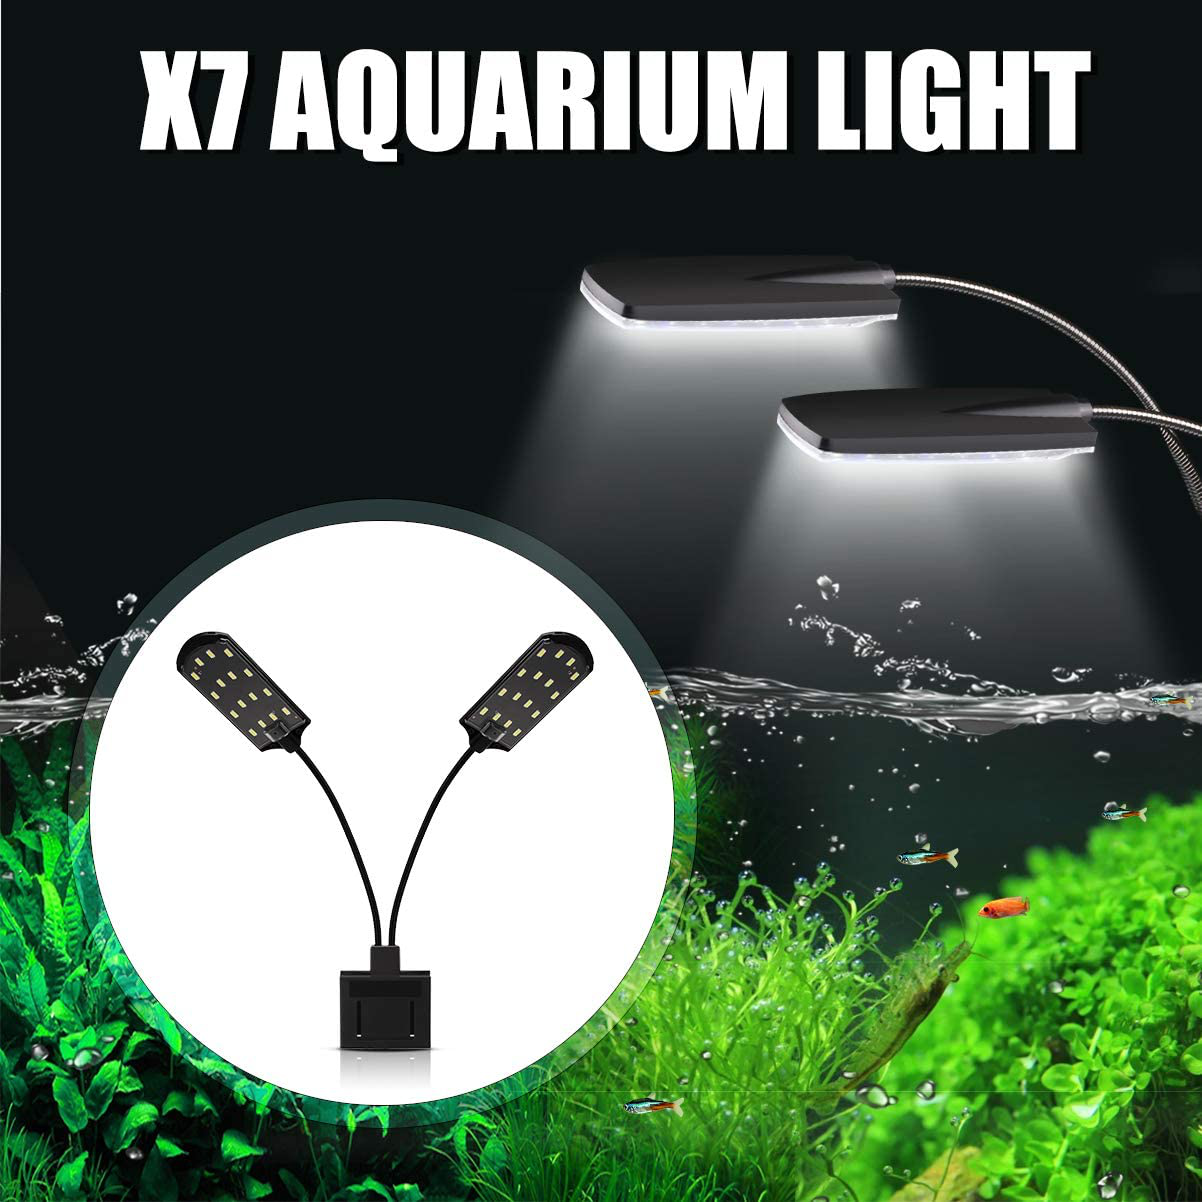 Senzeal X7 Gemini Double Head Aquarium Fish Tank Light US 15W 32 LED Aquarium Planted Clip Lamp 1600LM for 8-15 Inch Fish Tank White LED Lighting